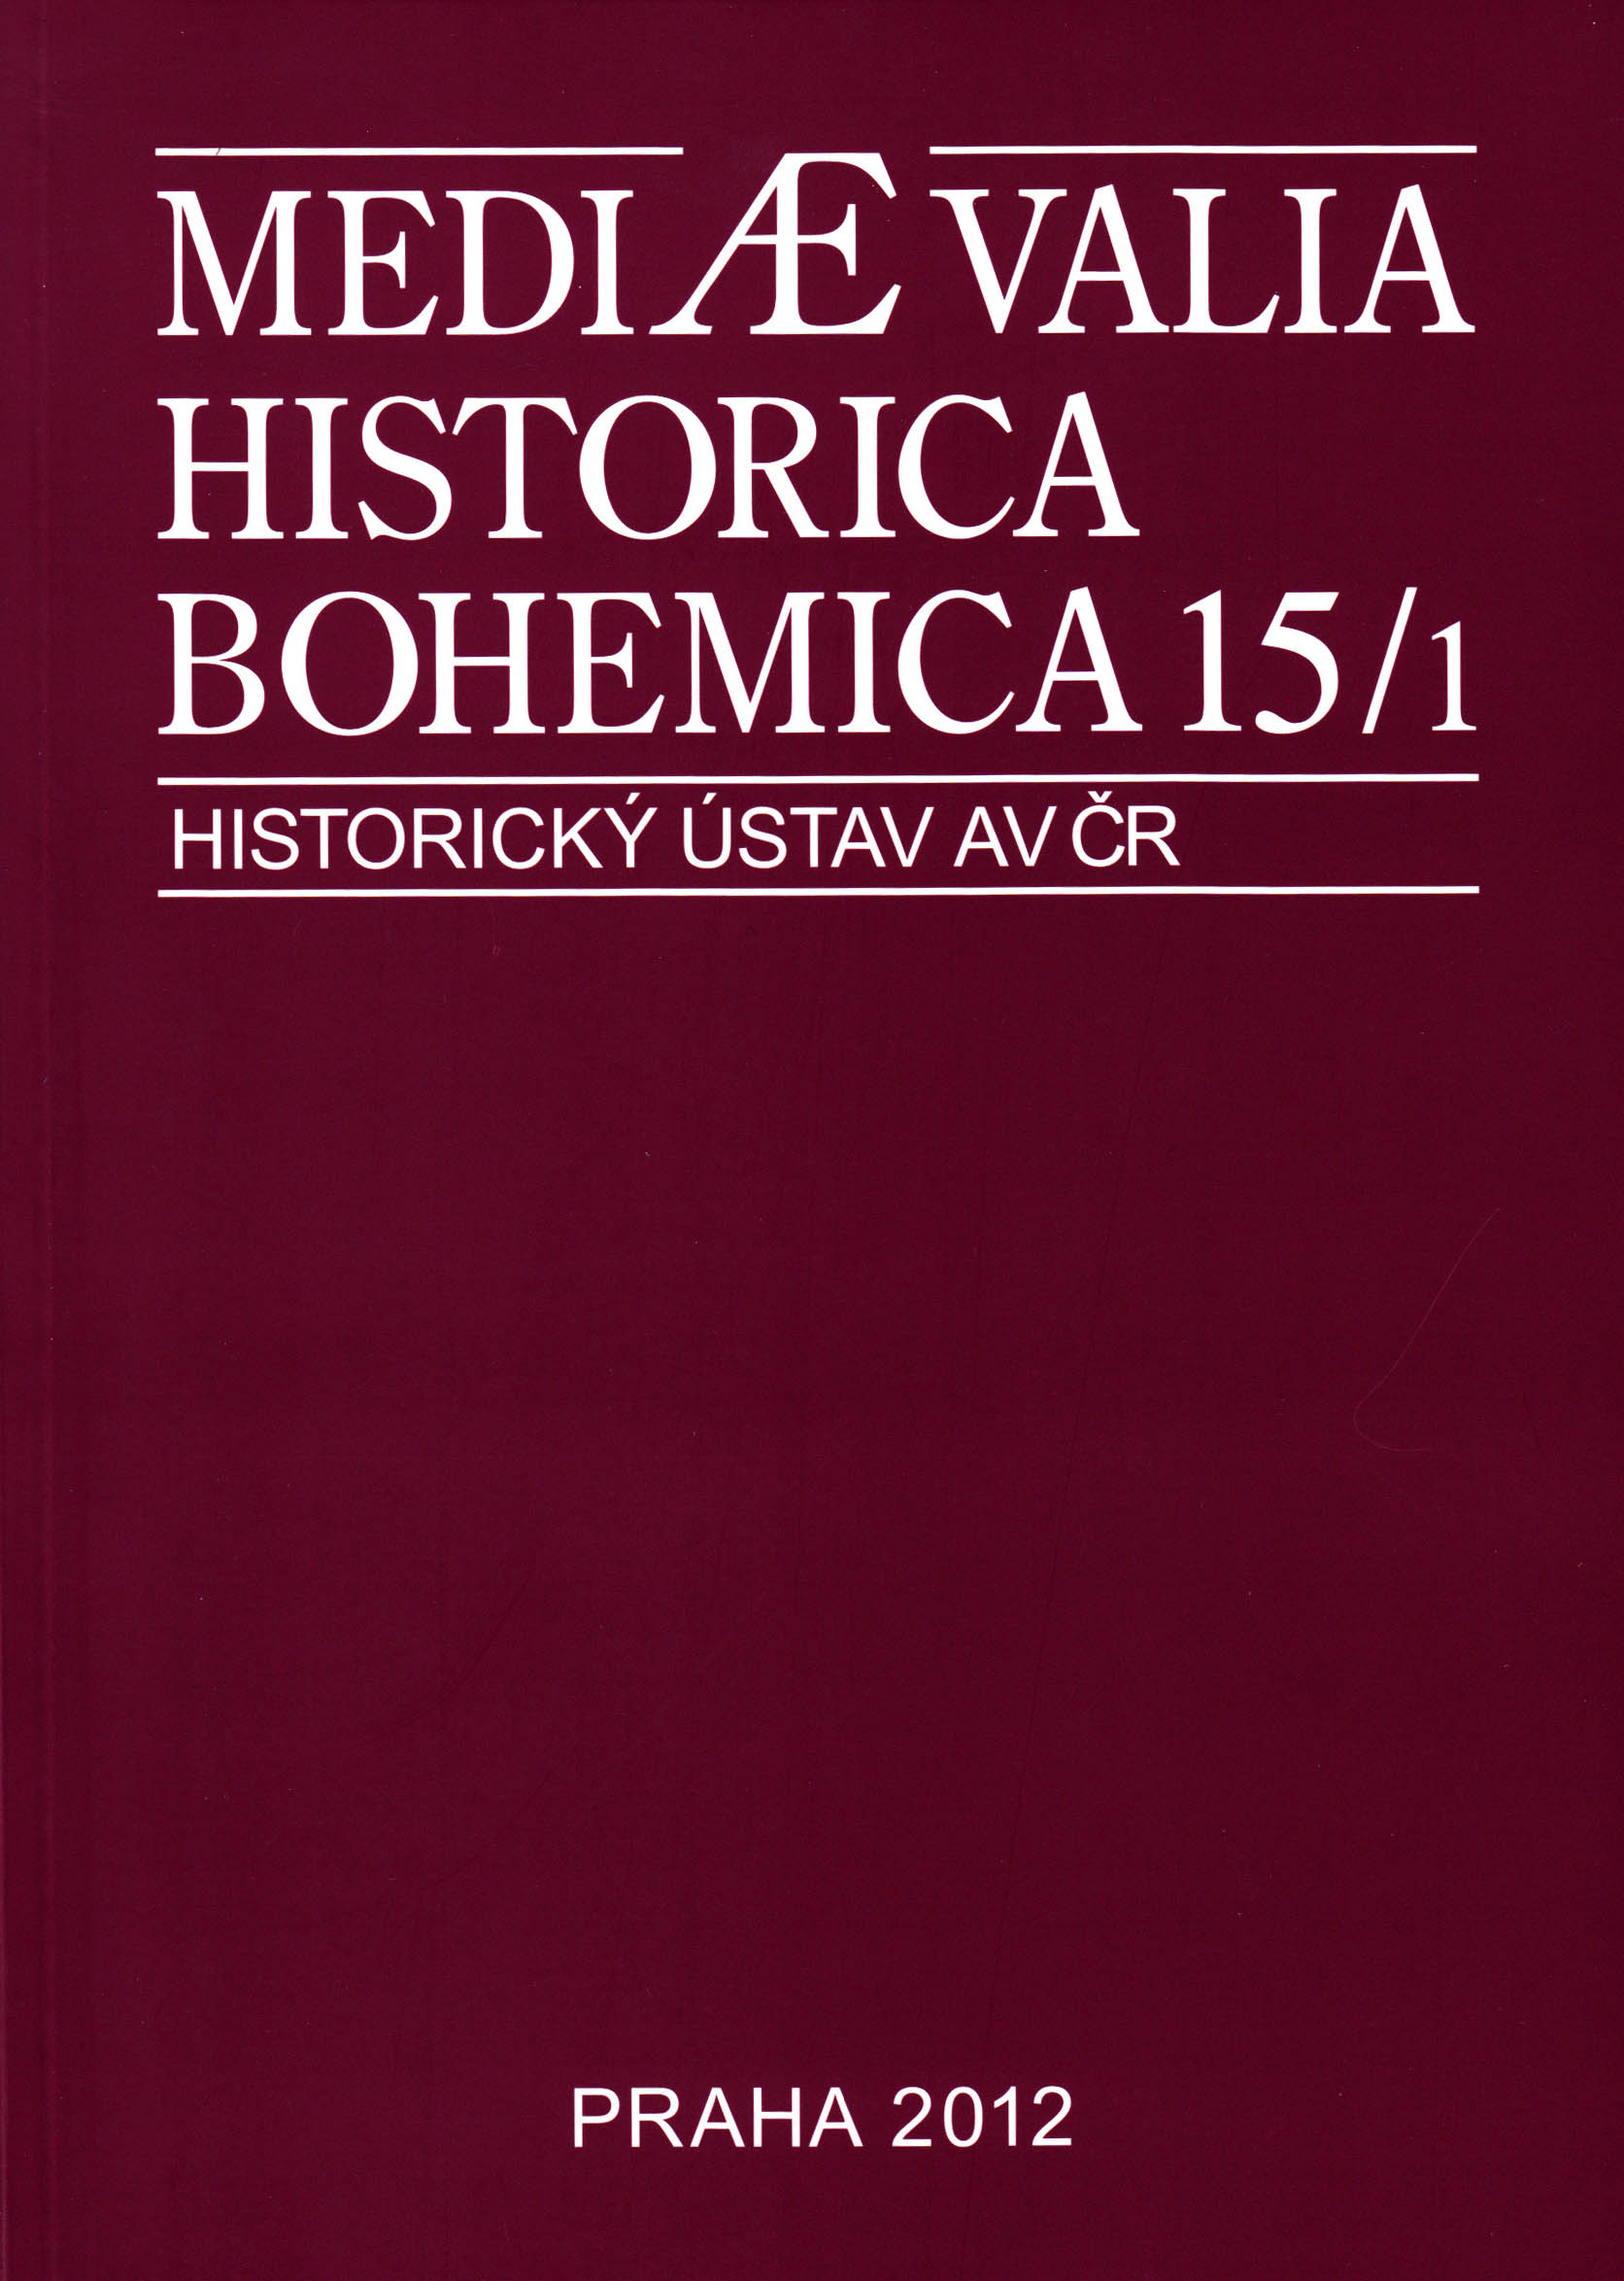 Zitierhinweis Tomášek, Jan: Rezension über: Magdalena Moravová (Hg.): Helmold z Bosau, Kronika Slovanů, Praha: Argo, 2012, in: Mediaevalia Historica Bohemica, 16 (2013), 1, S.